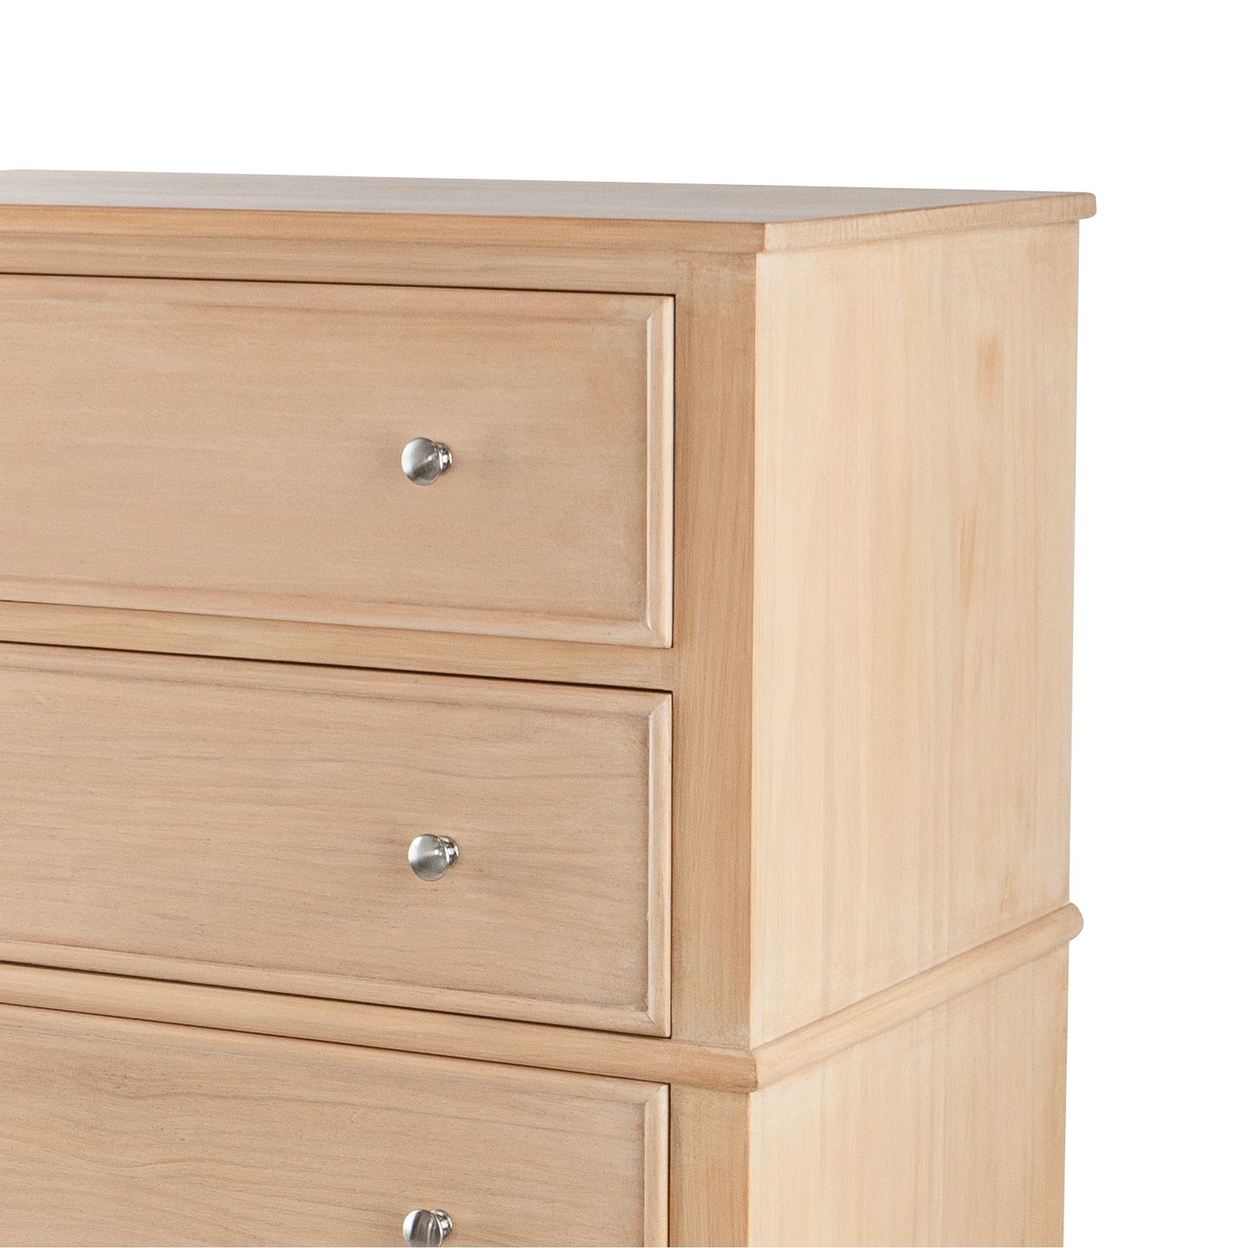 46 Inch Tall Dresser Chest, Pine Wood, 5 Drawers, Textured Natural Brown- Saltoro Sherpi